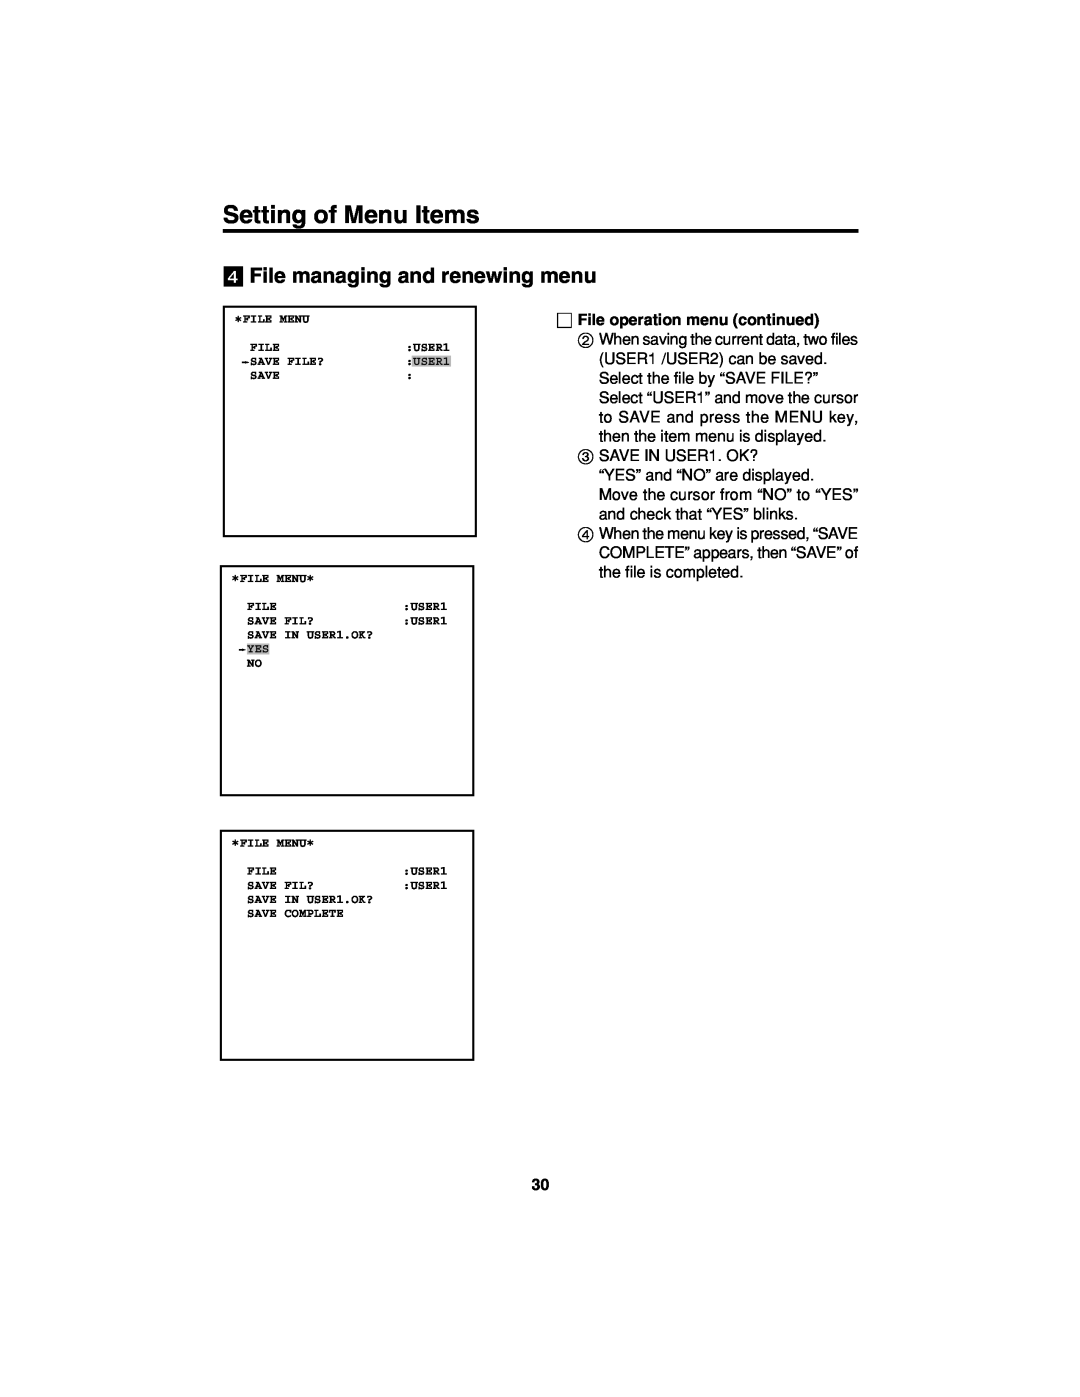 Panasonic AK-HC900 manual File operation menu continued, Setting of Menu Items, $ File managing and renewing menu 